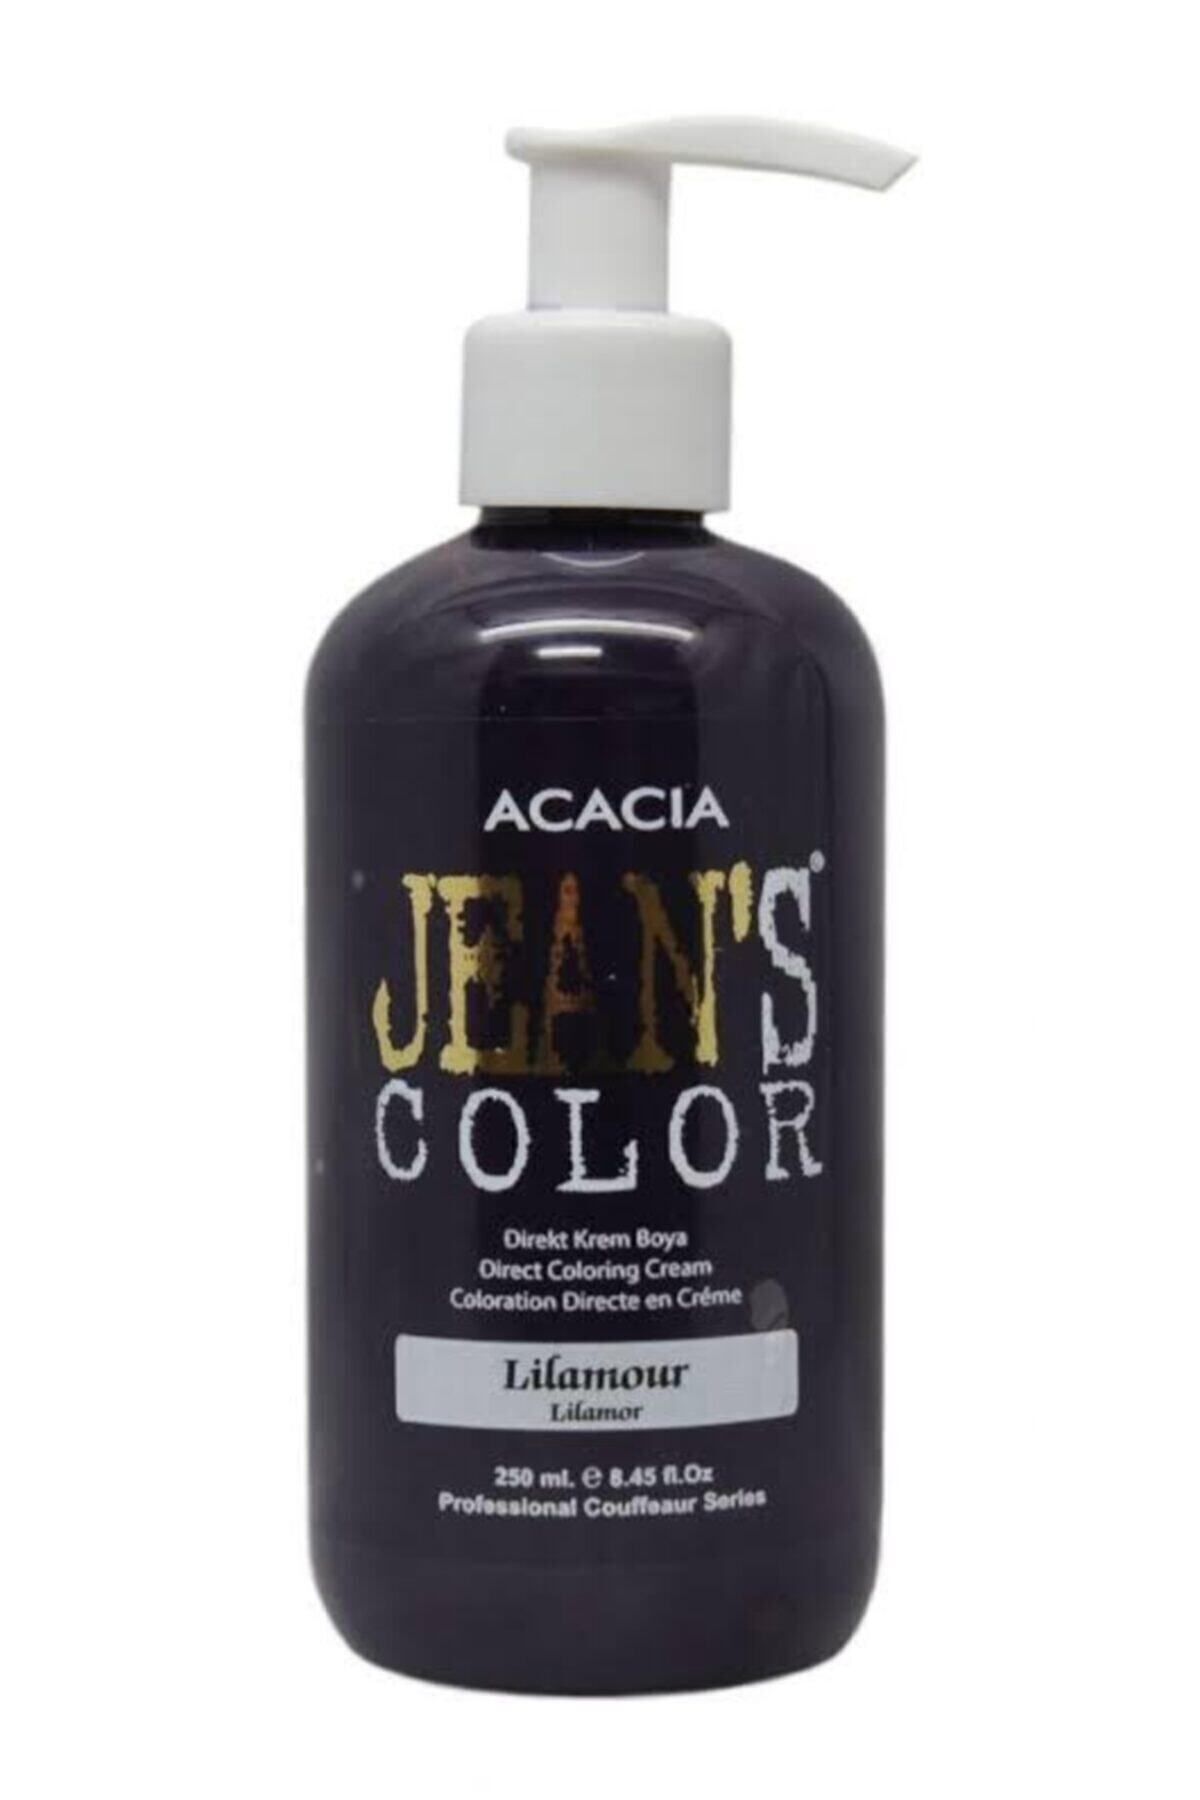 Acacia Jean's Color Lilamor (lilamour) 250ml